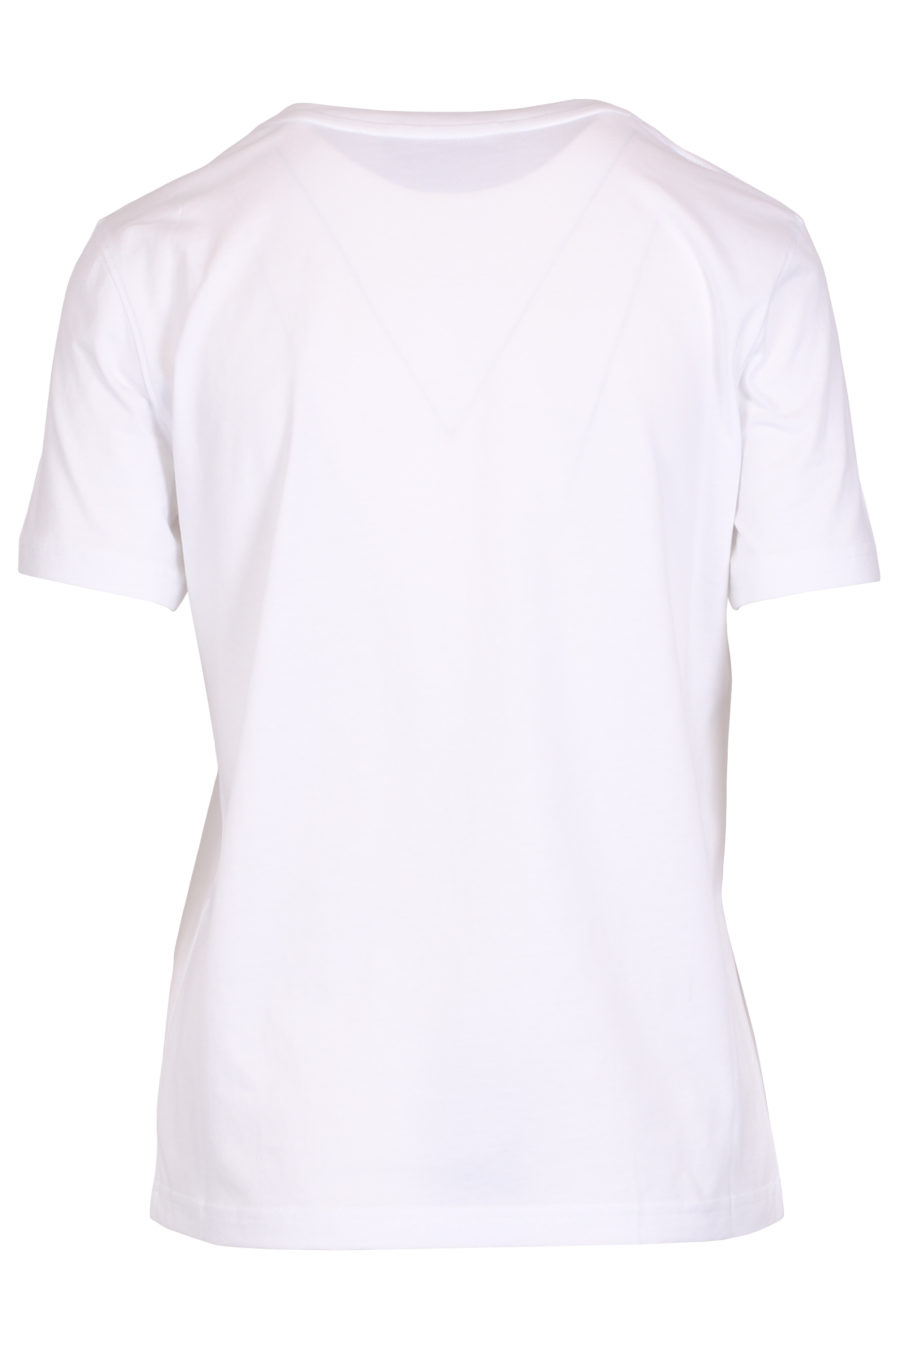 T-shirt blanc avec logo brillant - IMG 9325